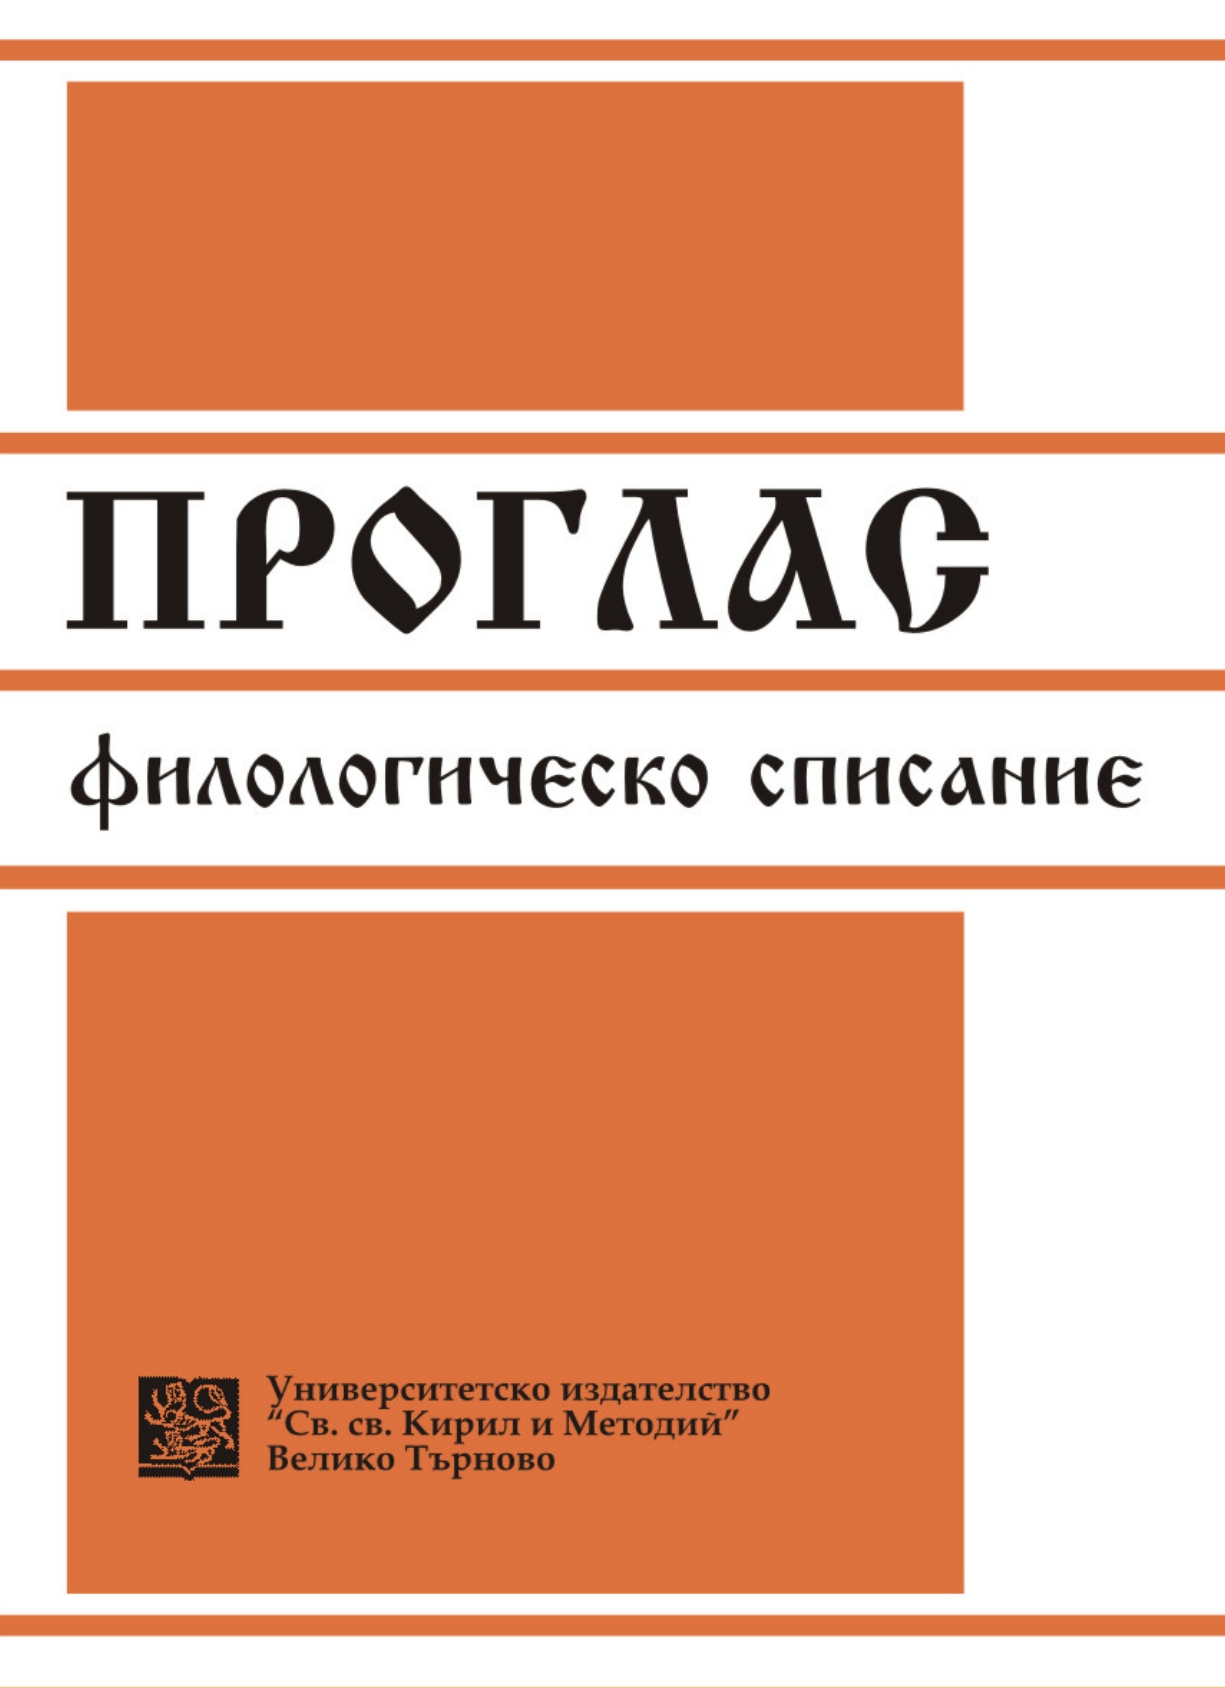 Jubilees: Assoc. Prof. Ph.D Ivanka Popova-Veleka Cover Image